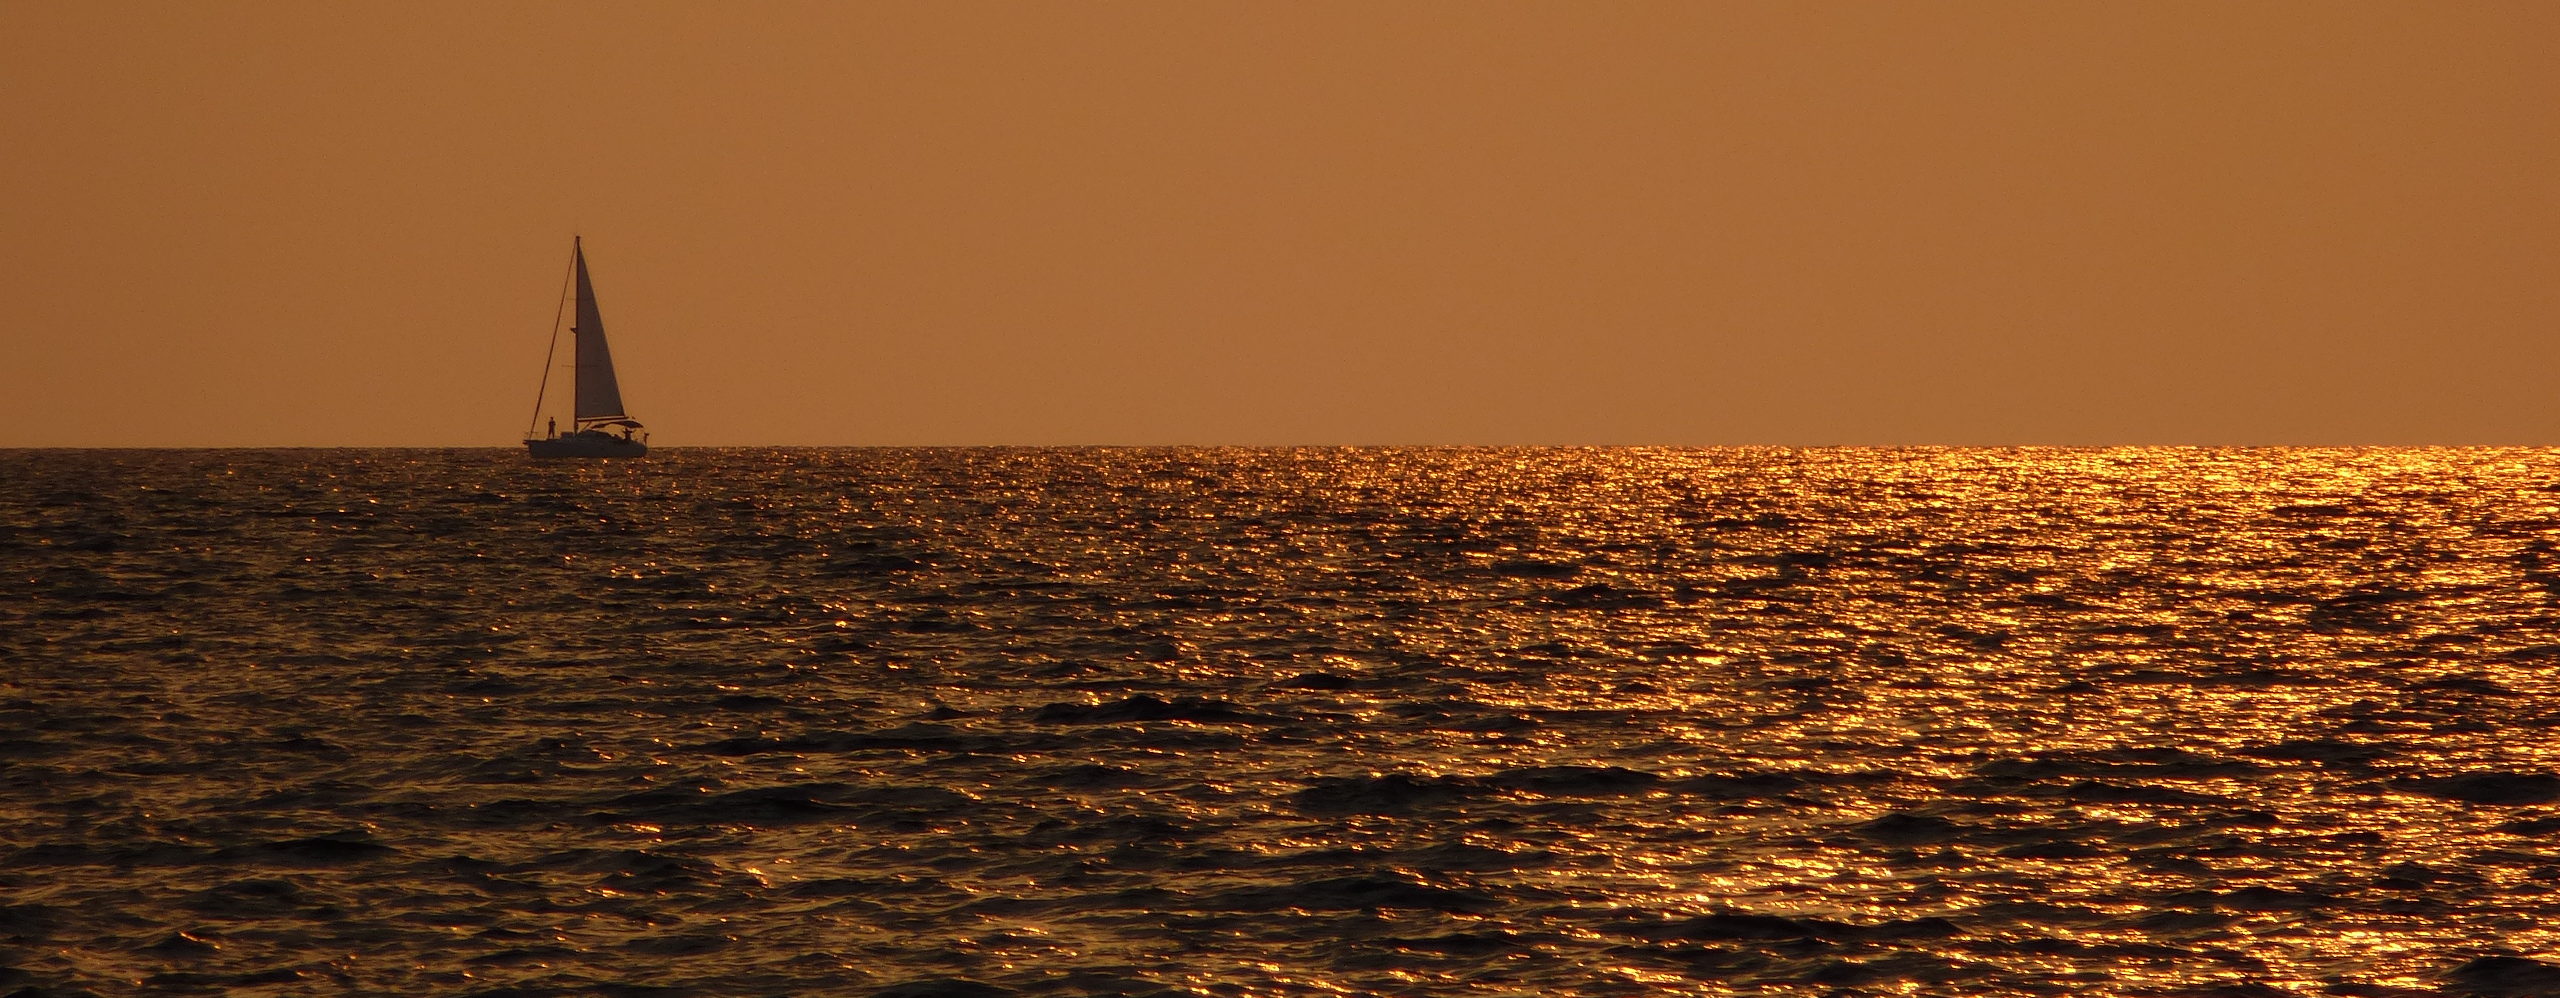 Saltyboys sailing yacht at sunset golden sea